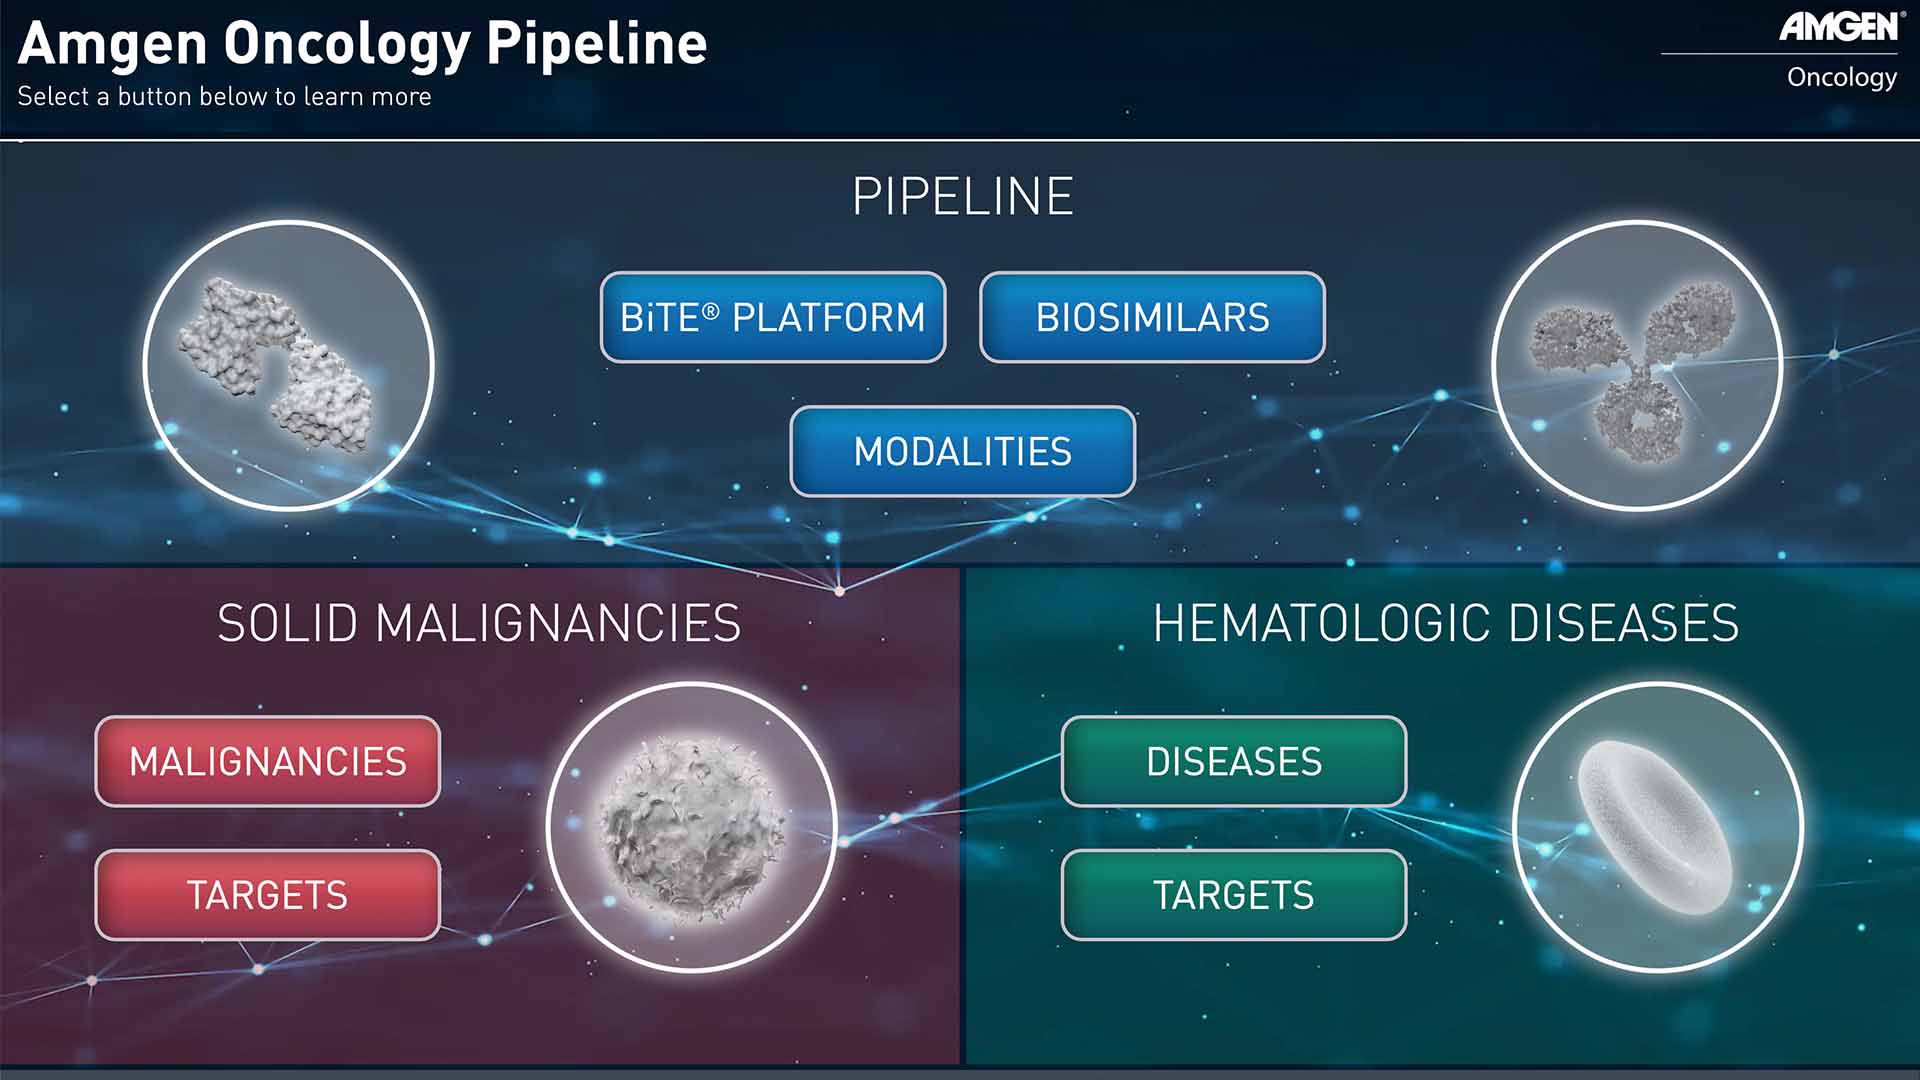 Amgen’s Oncology Pipeline Interactive